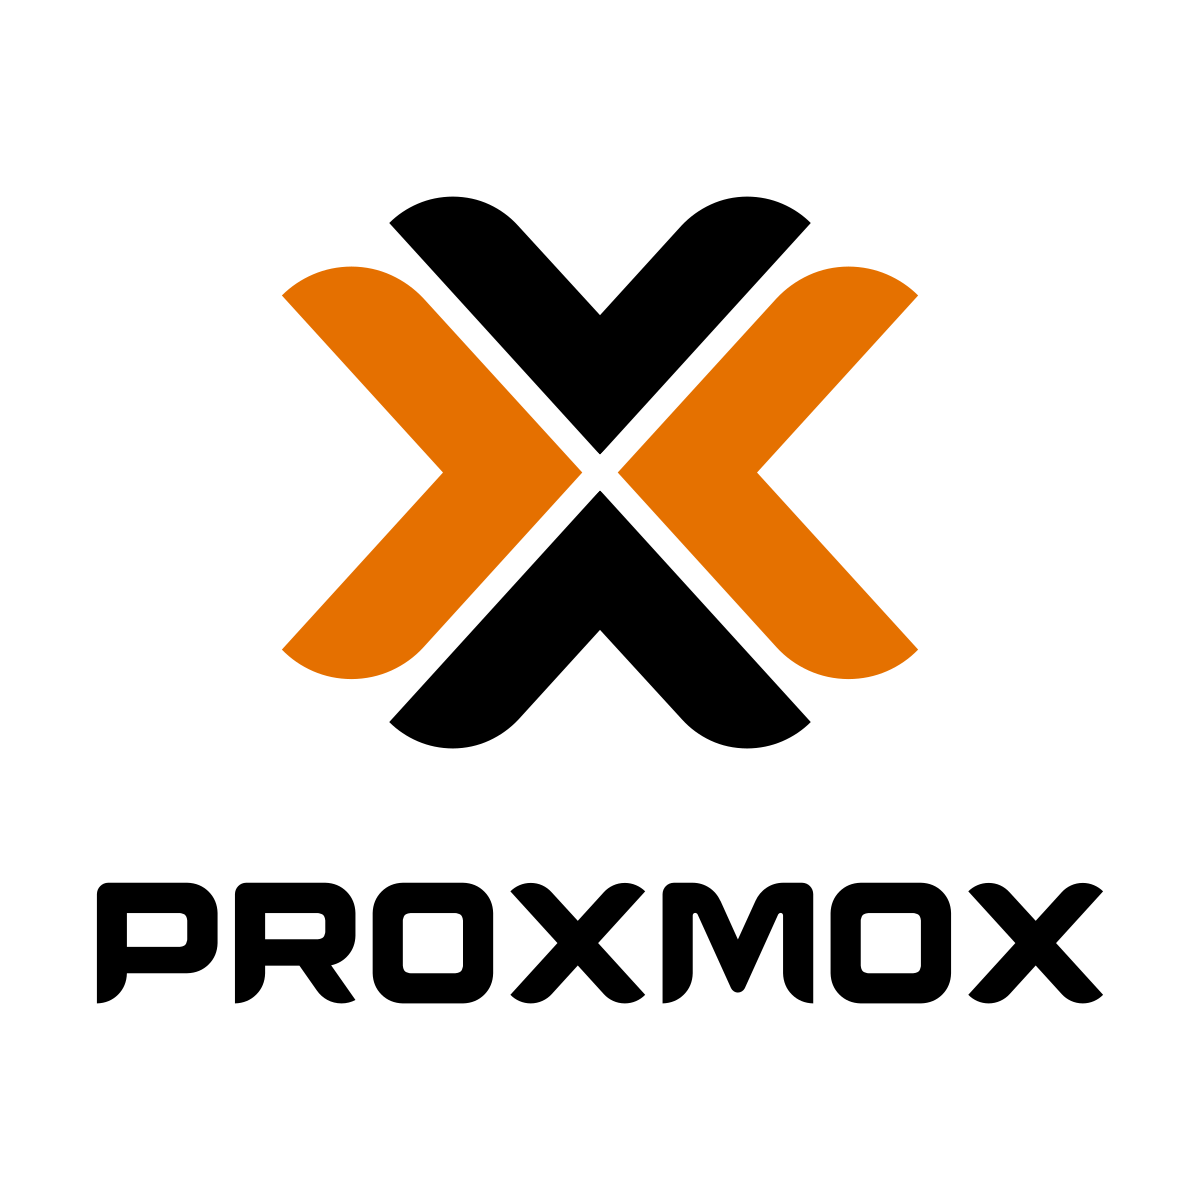 proxmox 8 release date